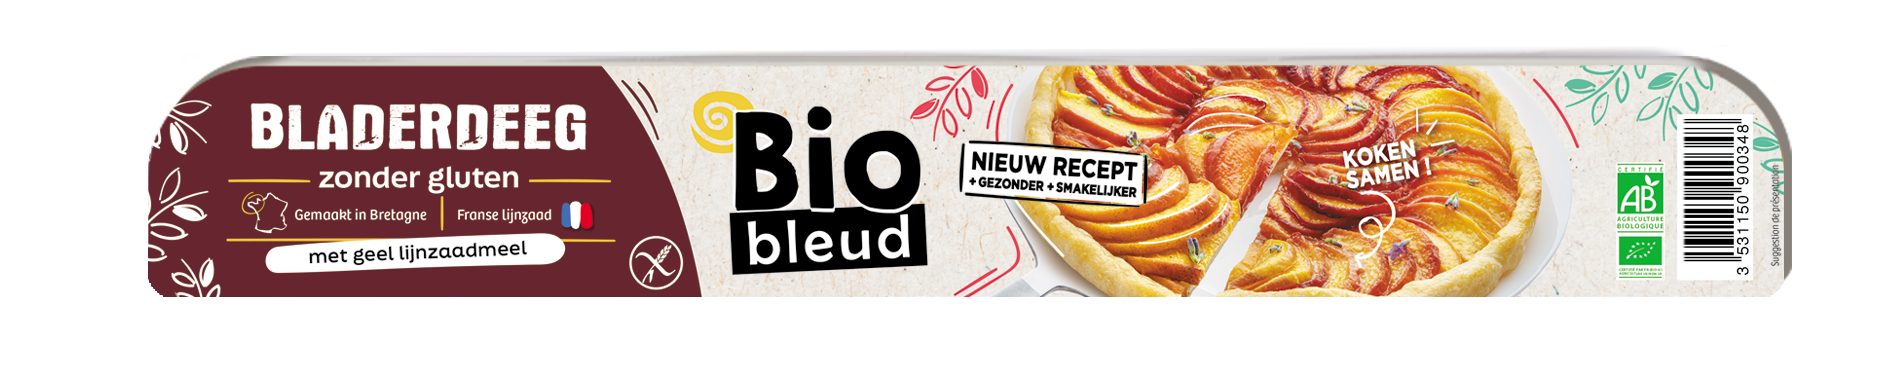 Biobleud Pâte feuilletée sans gluten bio 250g